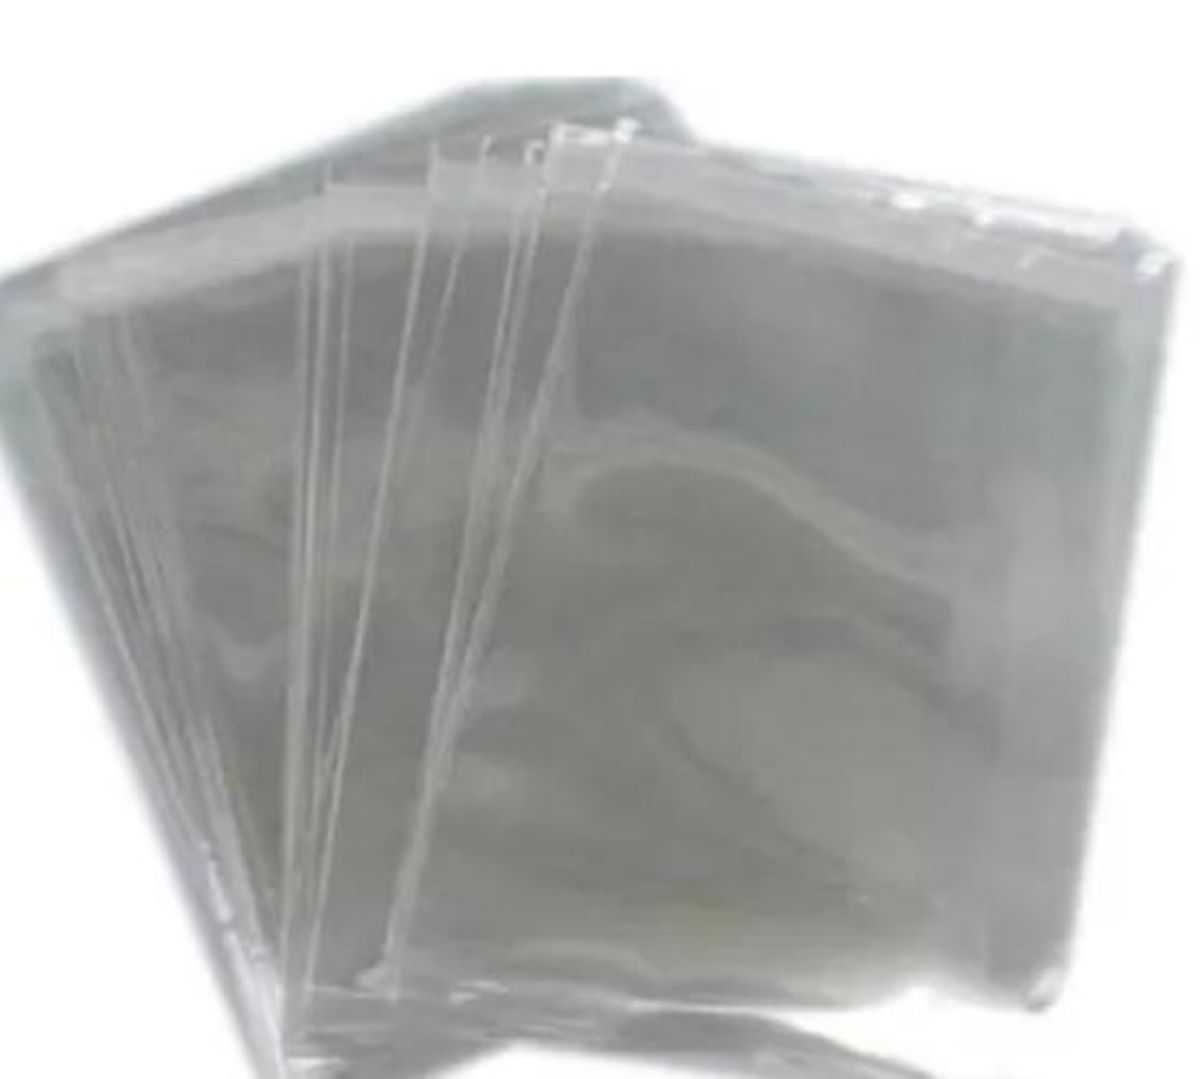 A set of (50) transparent plastic bags - 55 x 40 cm - صفقات لمستلزمات  التعبئة والتغليف بسعر الجملة